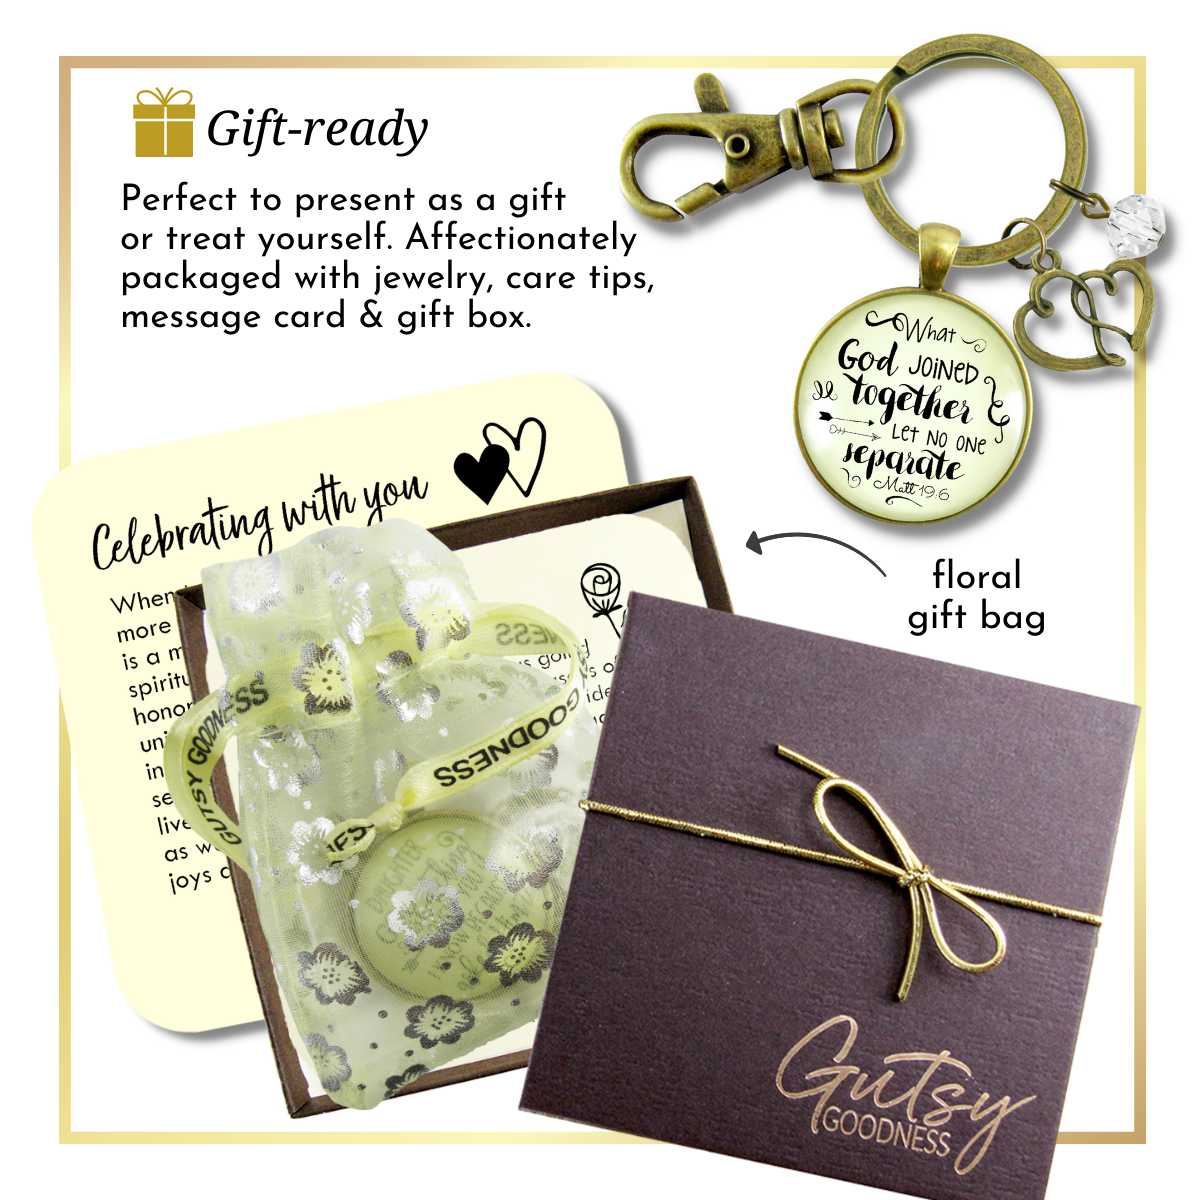 Woman of Faith Keychain Marriage Quote Bridal Shower Wedding Gift  Keychain - Women - Gutsy Goodness Handmade Jewelry